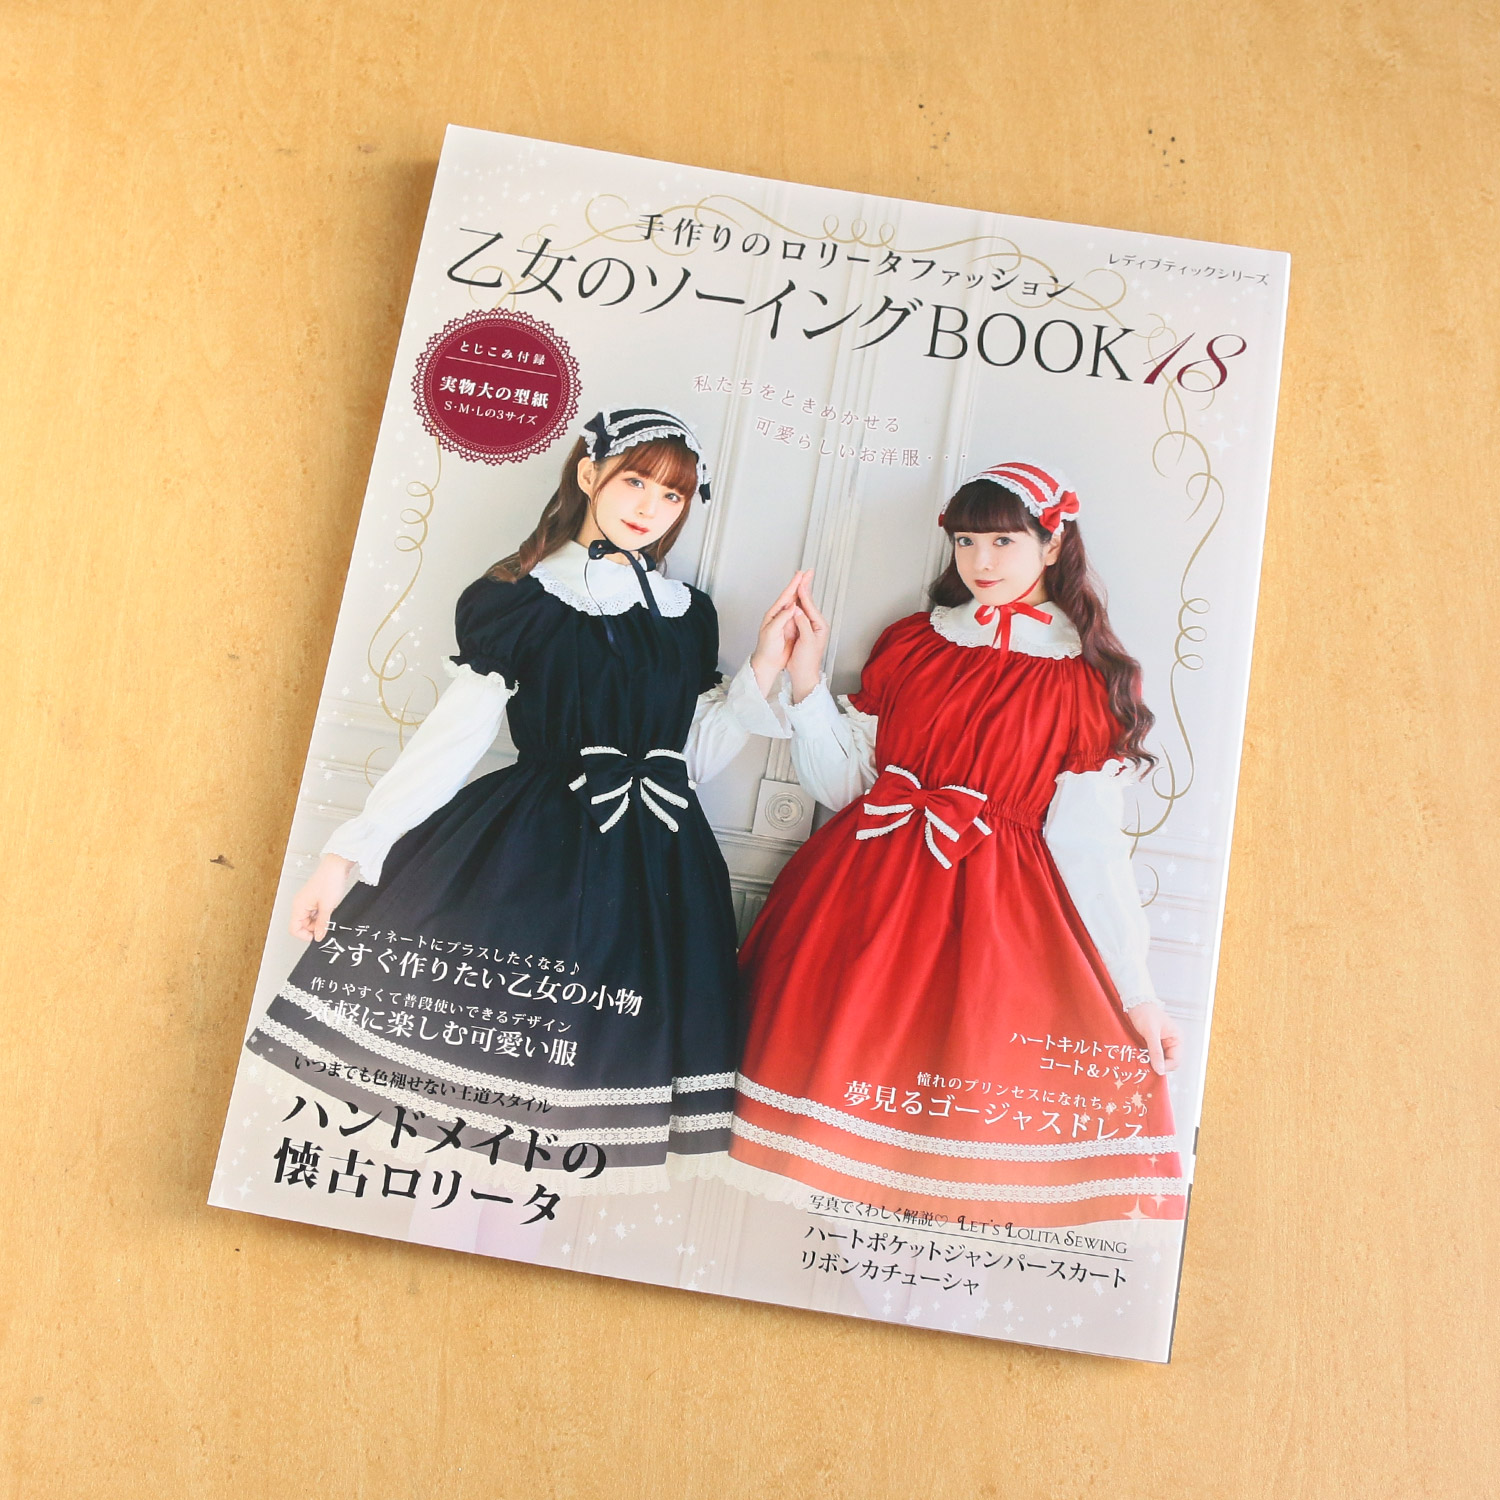 S8474 Handmade Lolita Fashion The Maiden's Sewing Book 18(book)